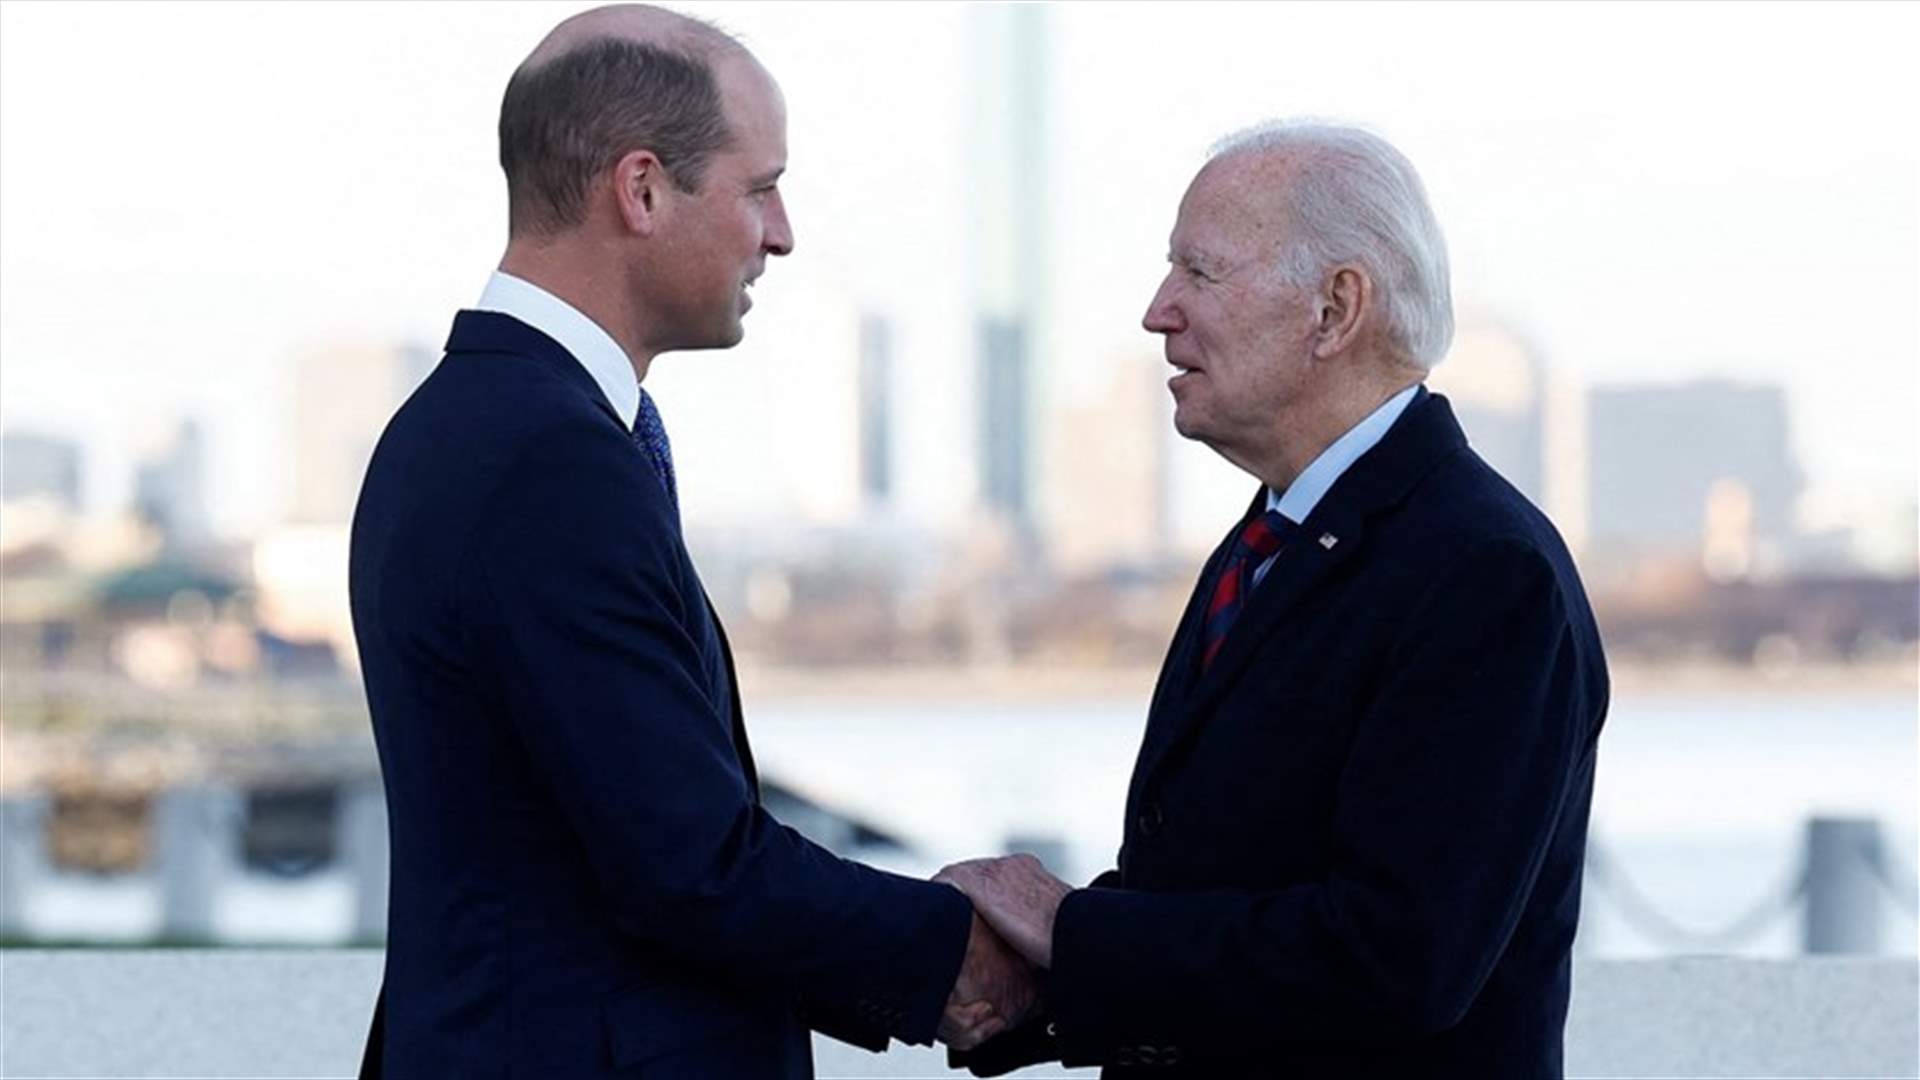 Prince William meets President Biden, awards climate prizes